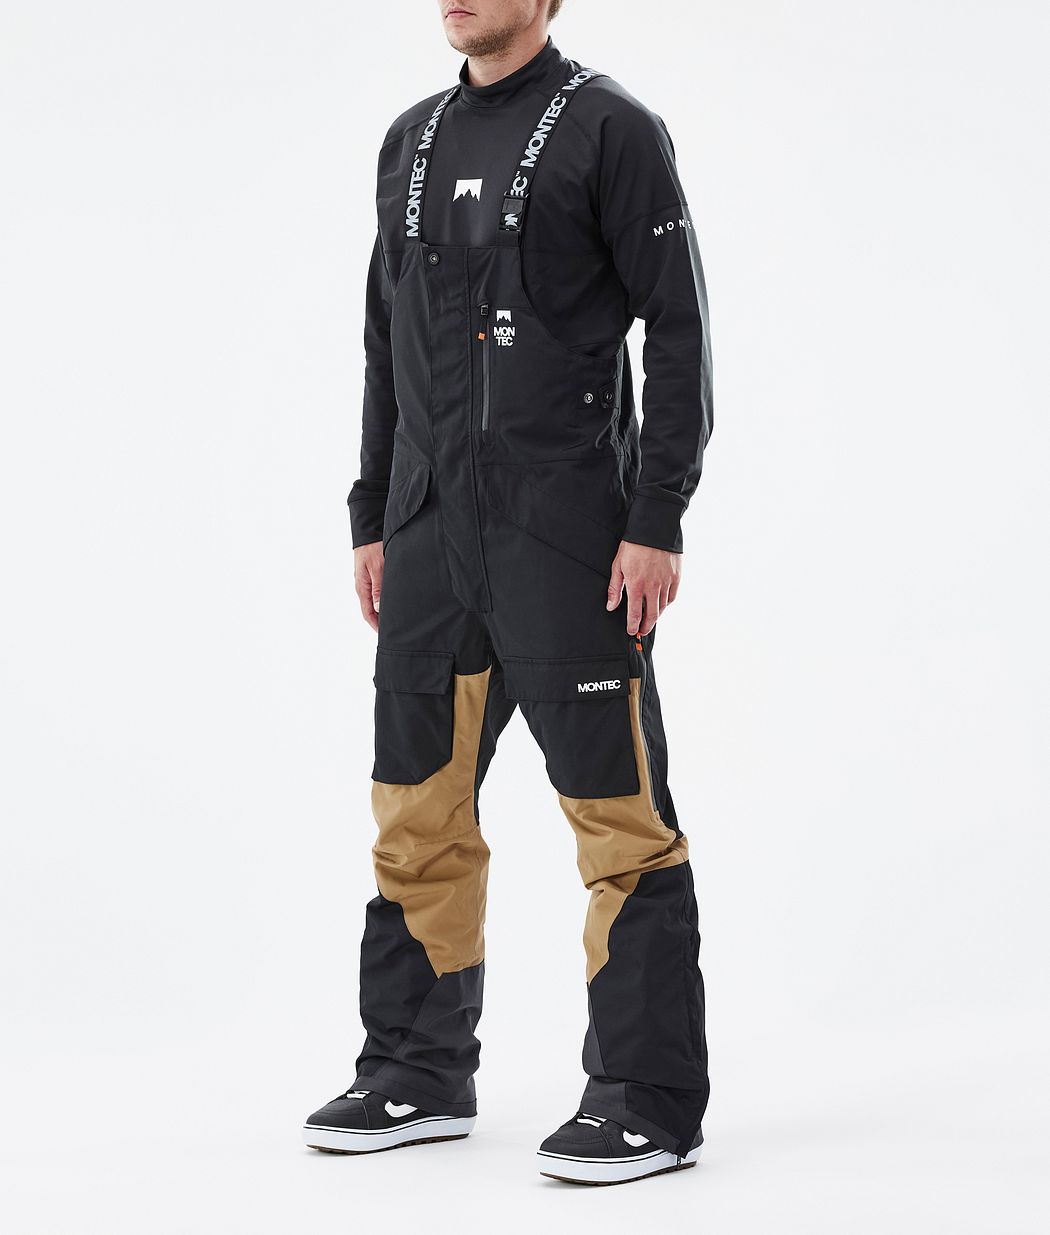 Fawk Snowboard Pants Men Black/Gold